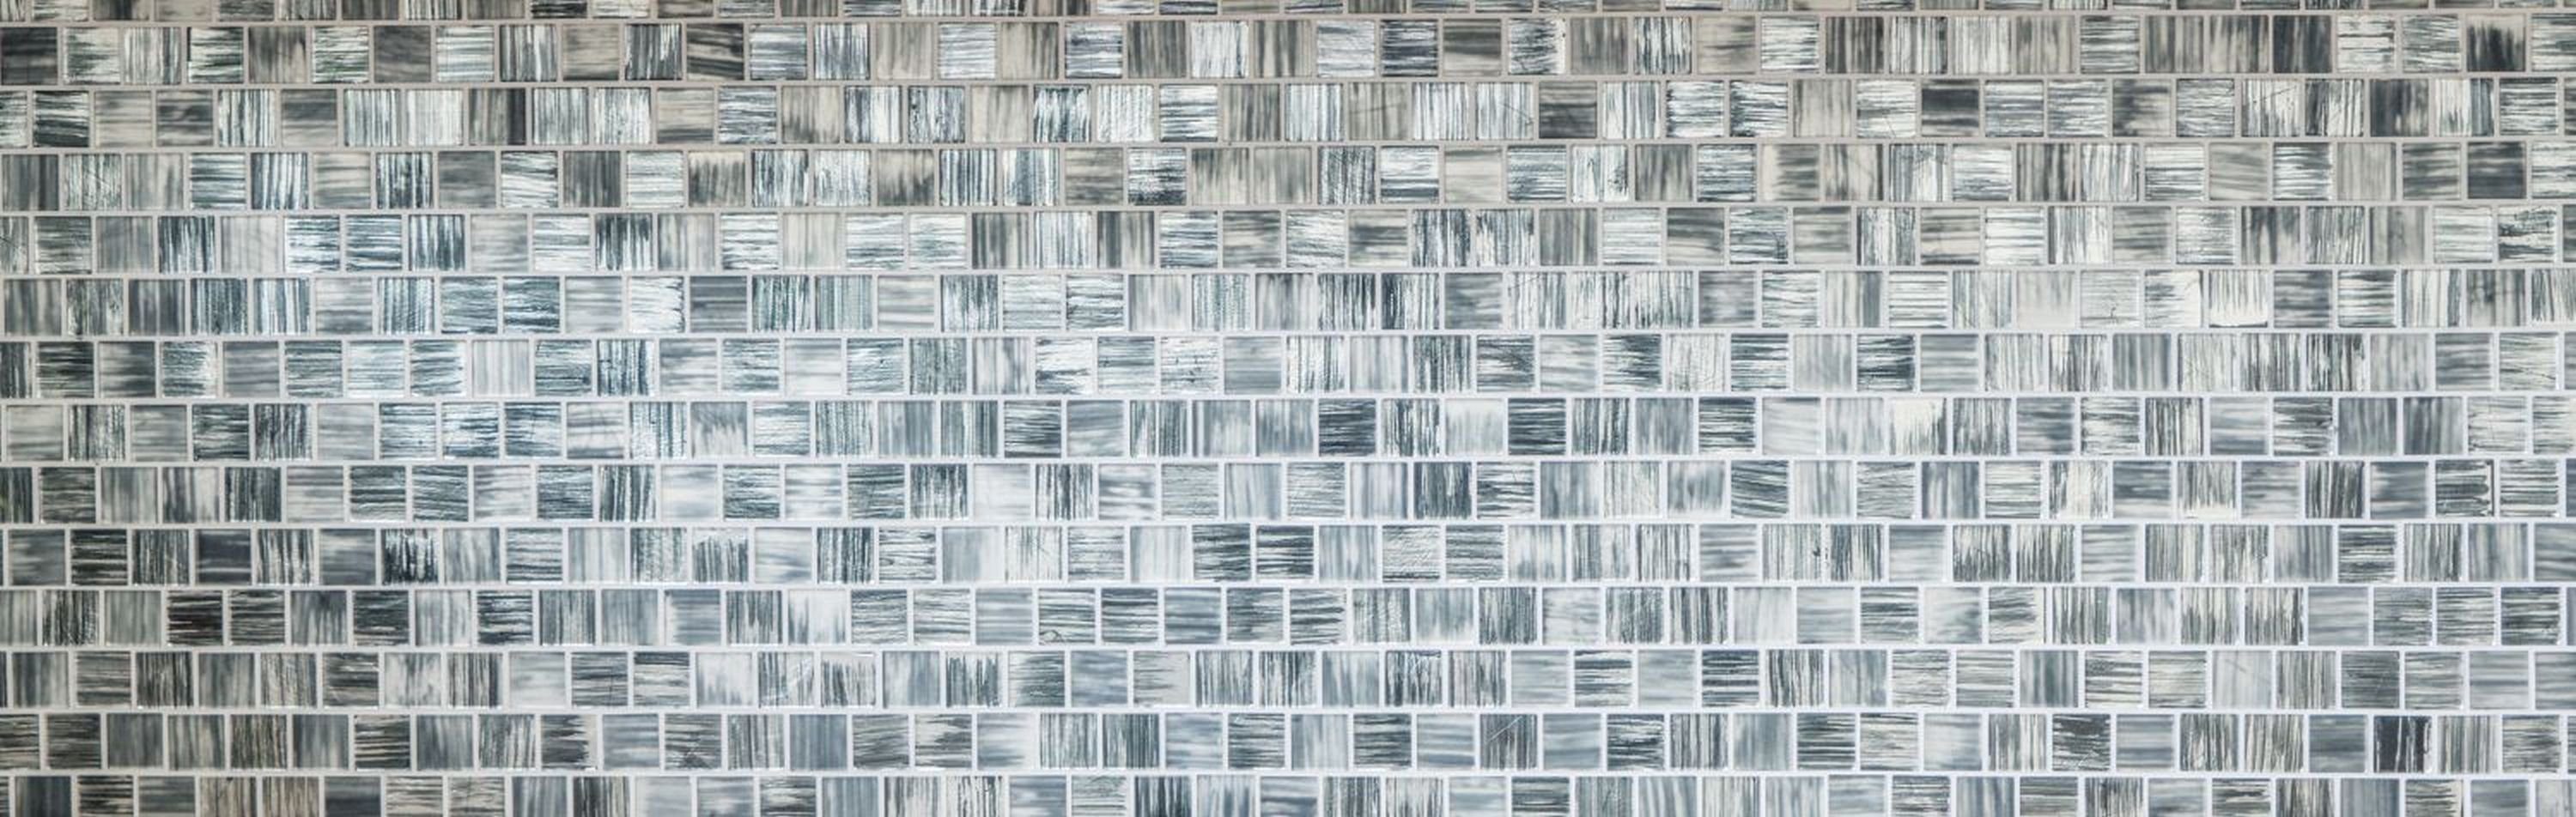 Fliese matt schwarz Glasmosaik Mosani Mosaik Milchglas Struktur klar Mosaikfliesen